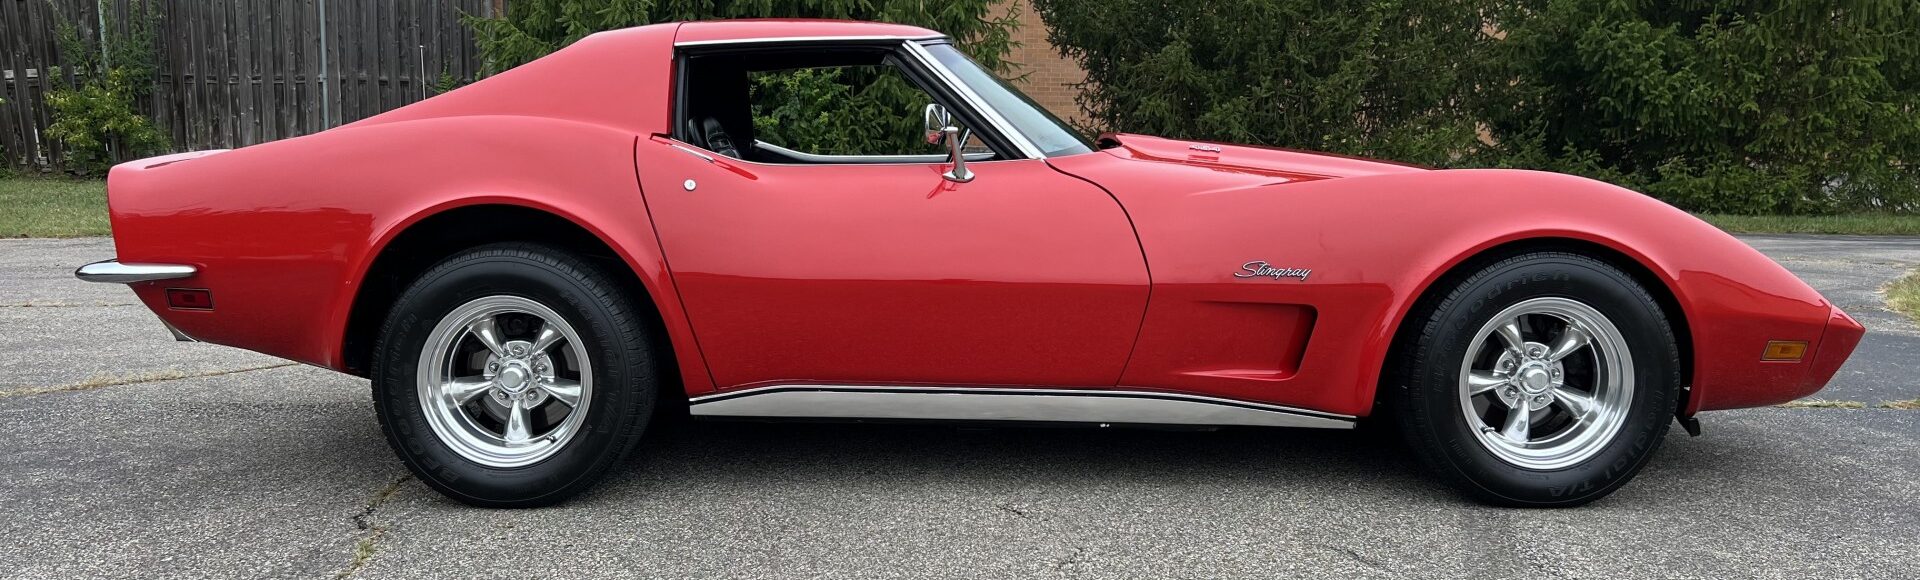 1973 Corvette, Factory 454, Working AC, $25,900